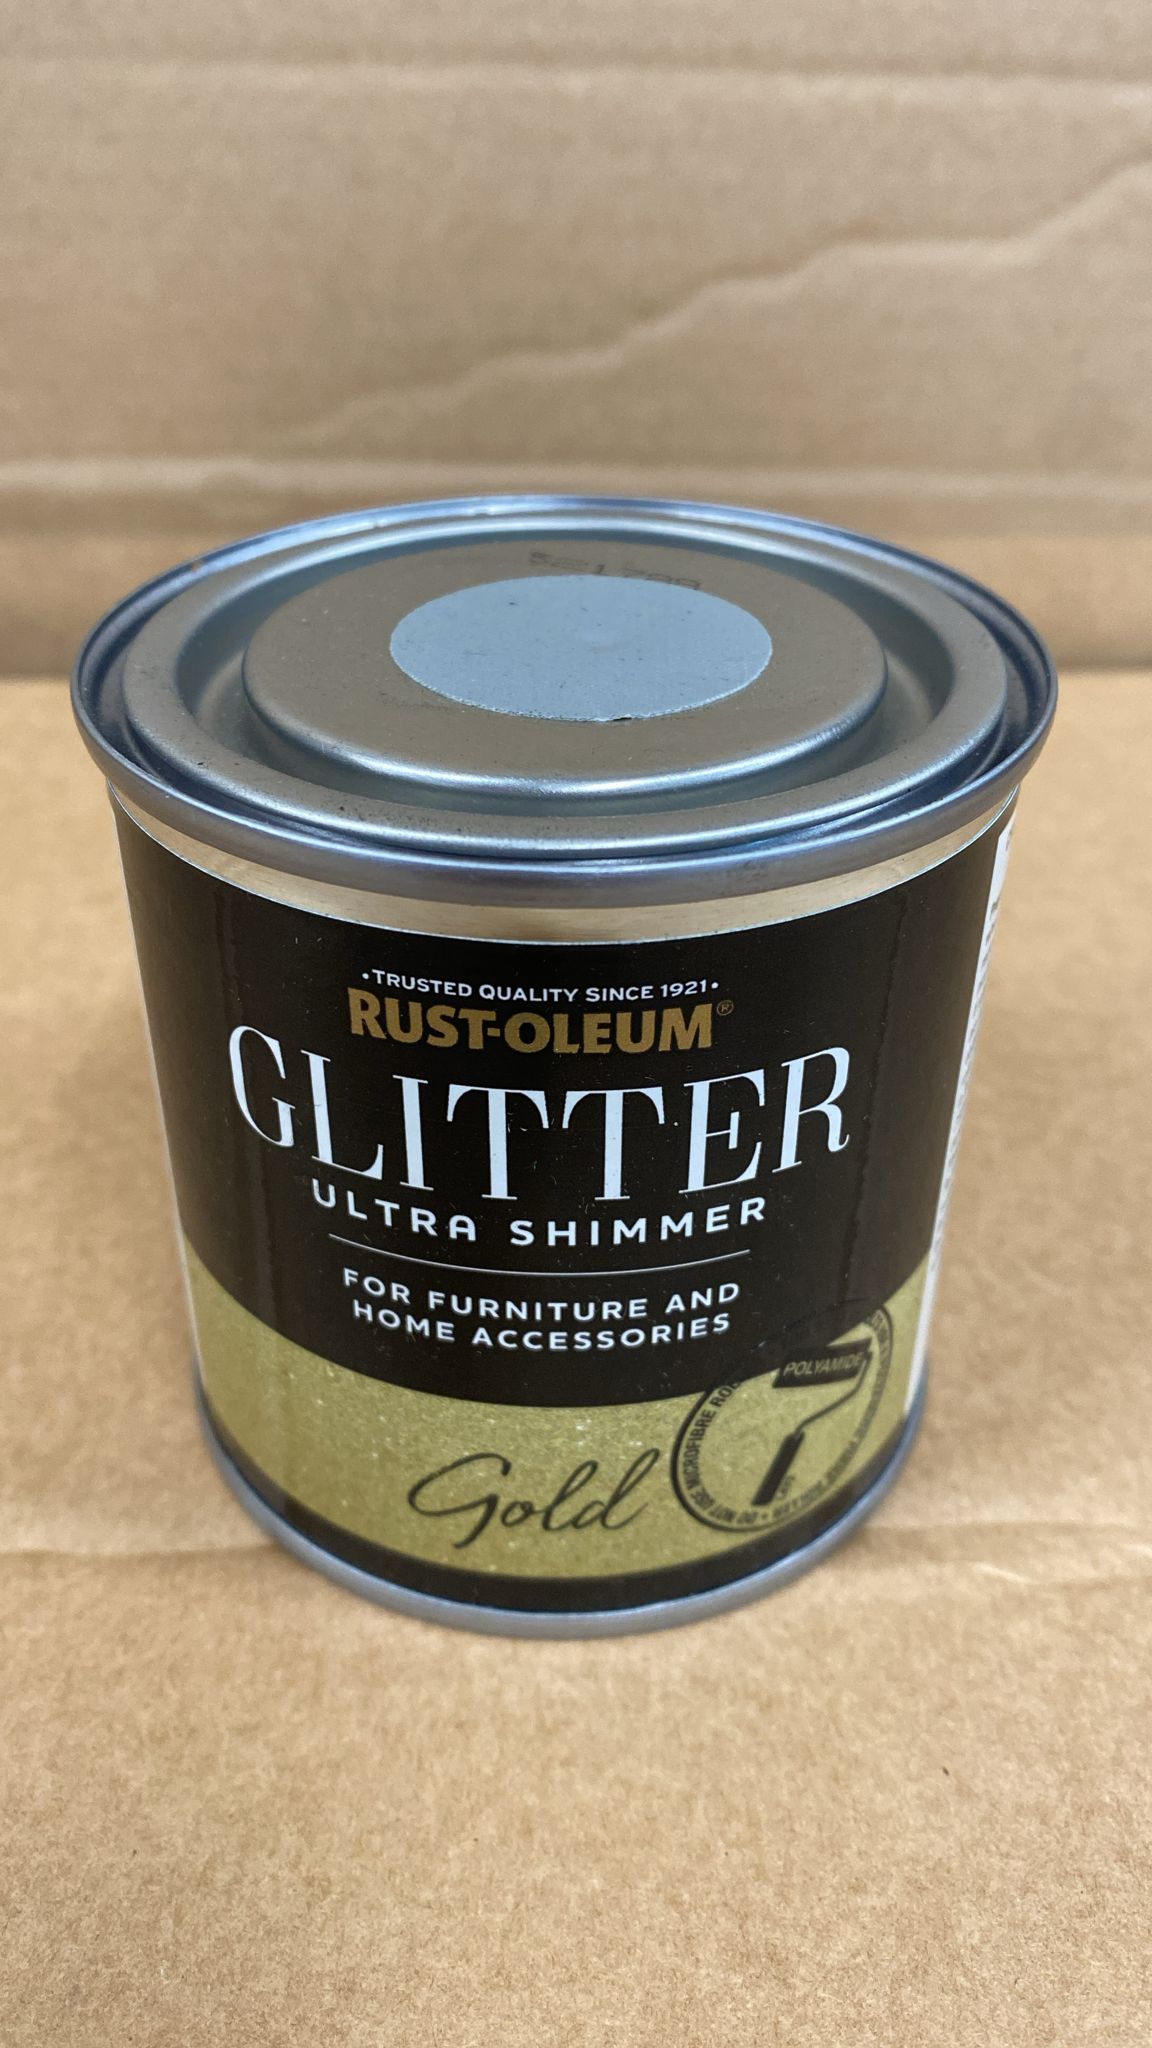 Rust-Oleum-Paint glitter,Topcoat-Gold 250ml 9659